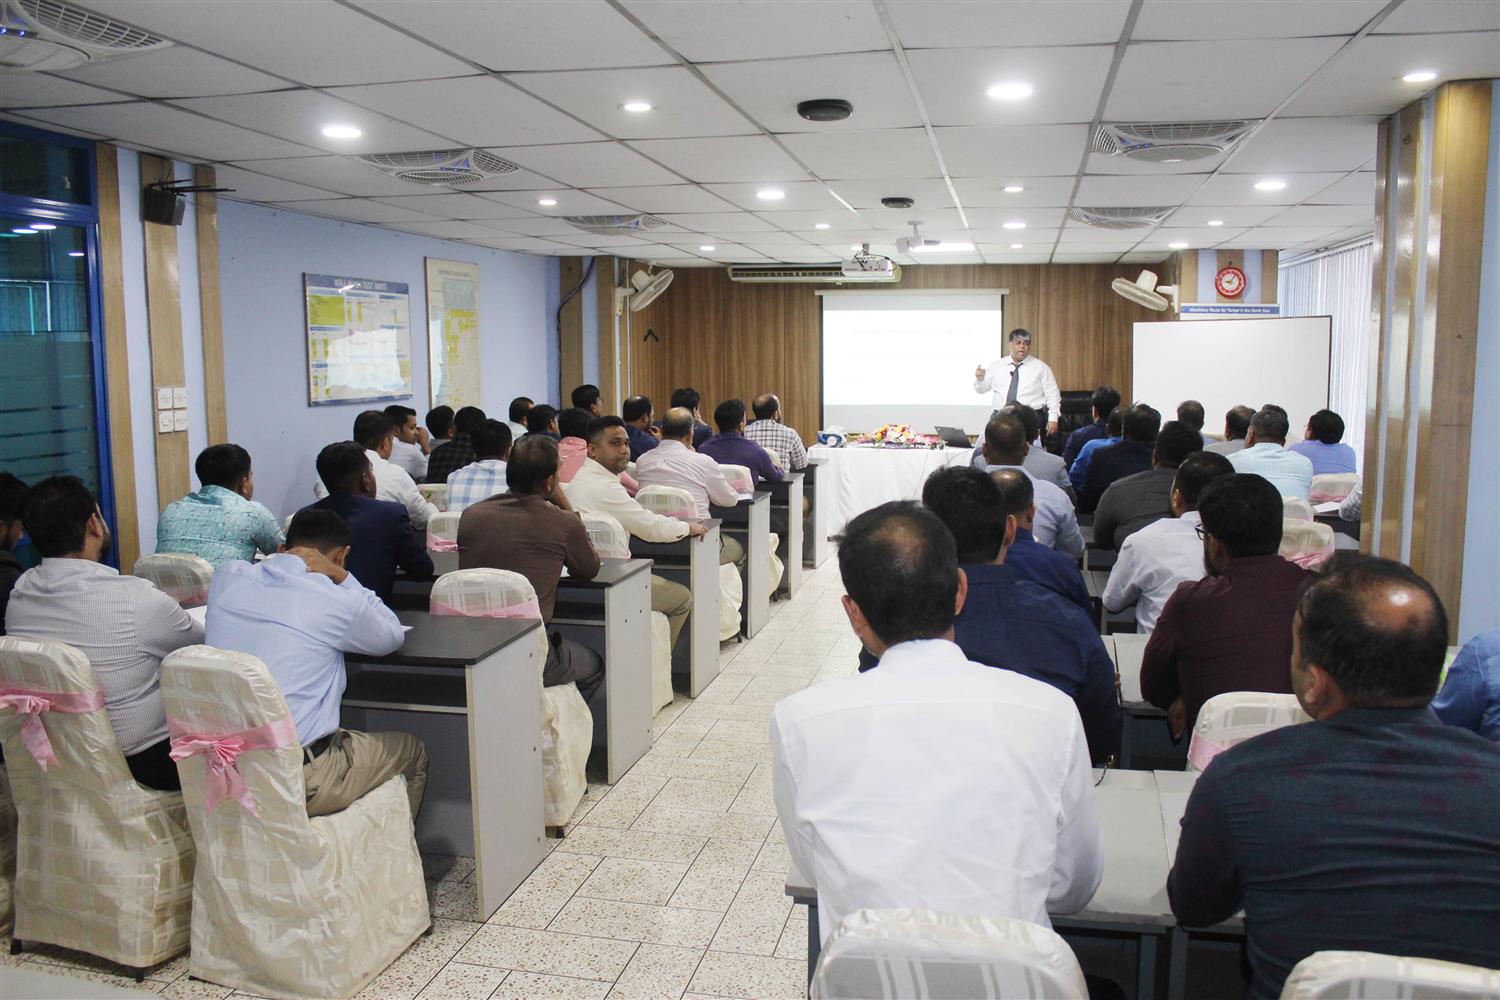 51th Training and Education Seminar of Unix Line Pte Ltd.